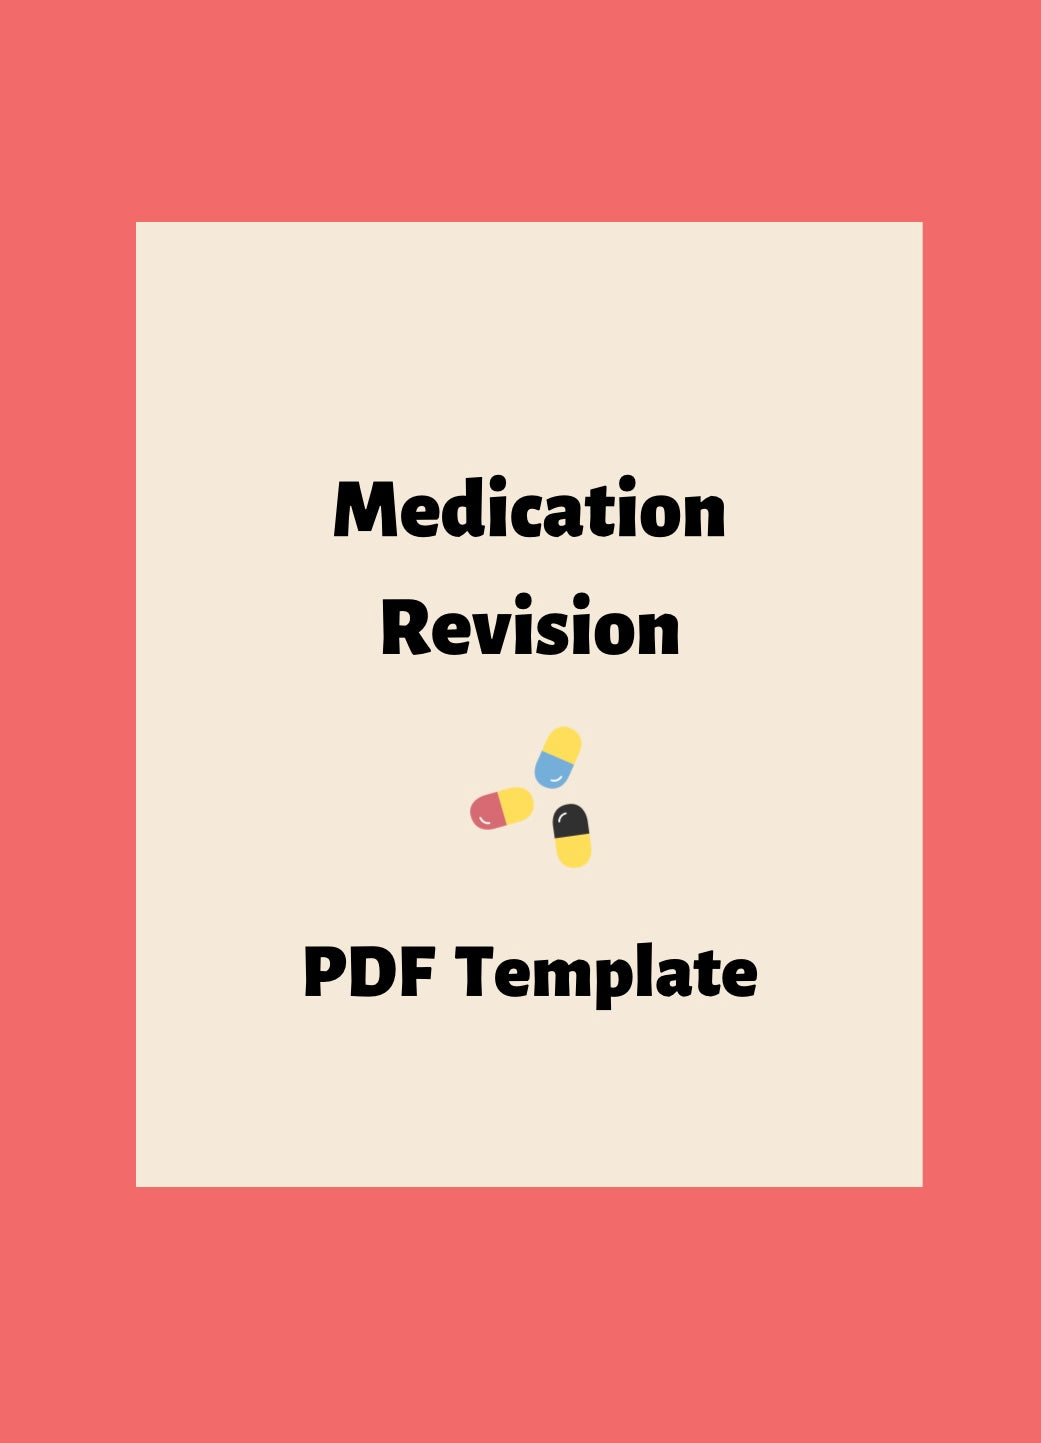 Medication Revision Template (DIGITAL)